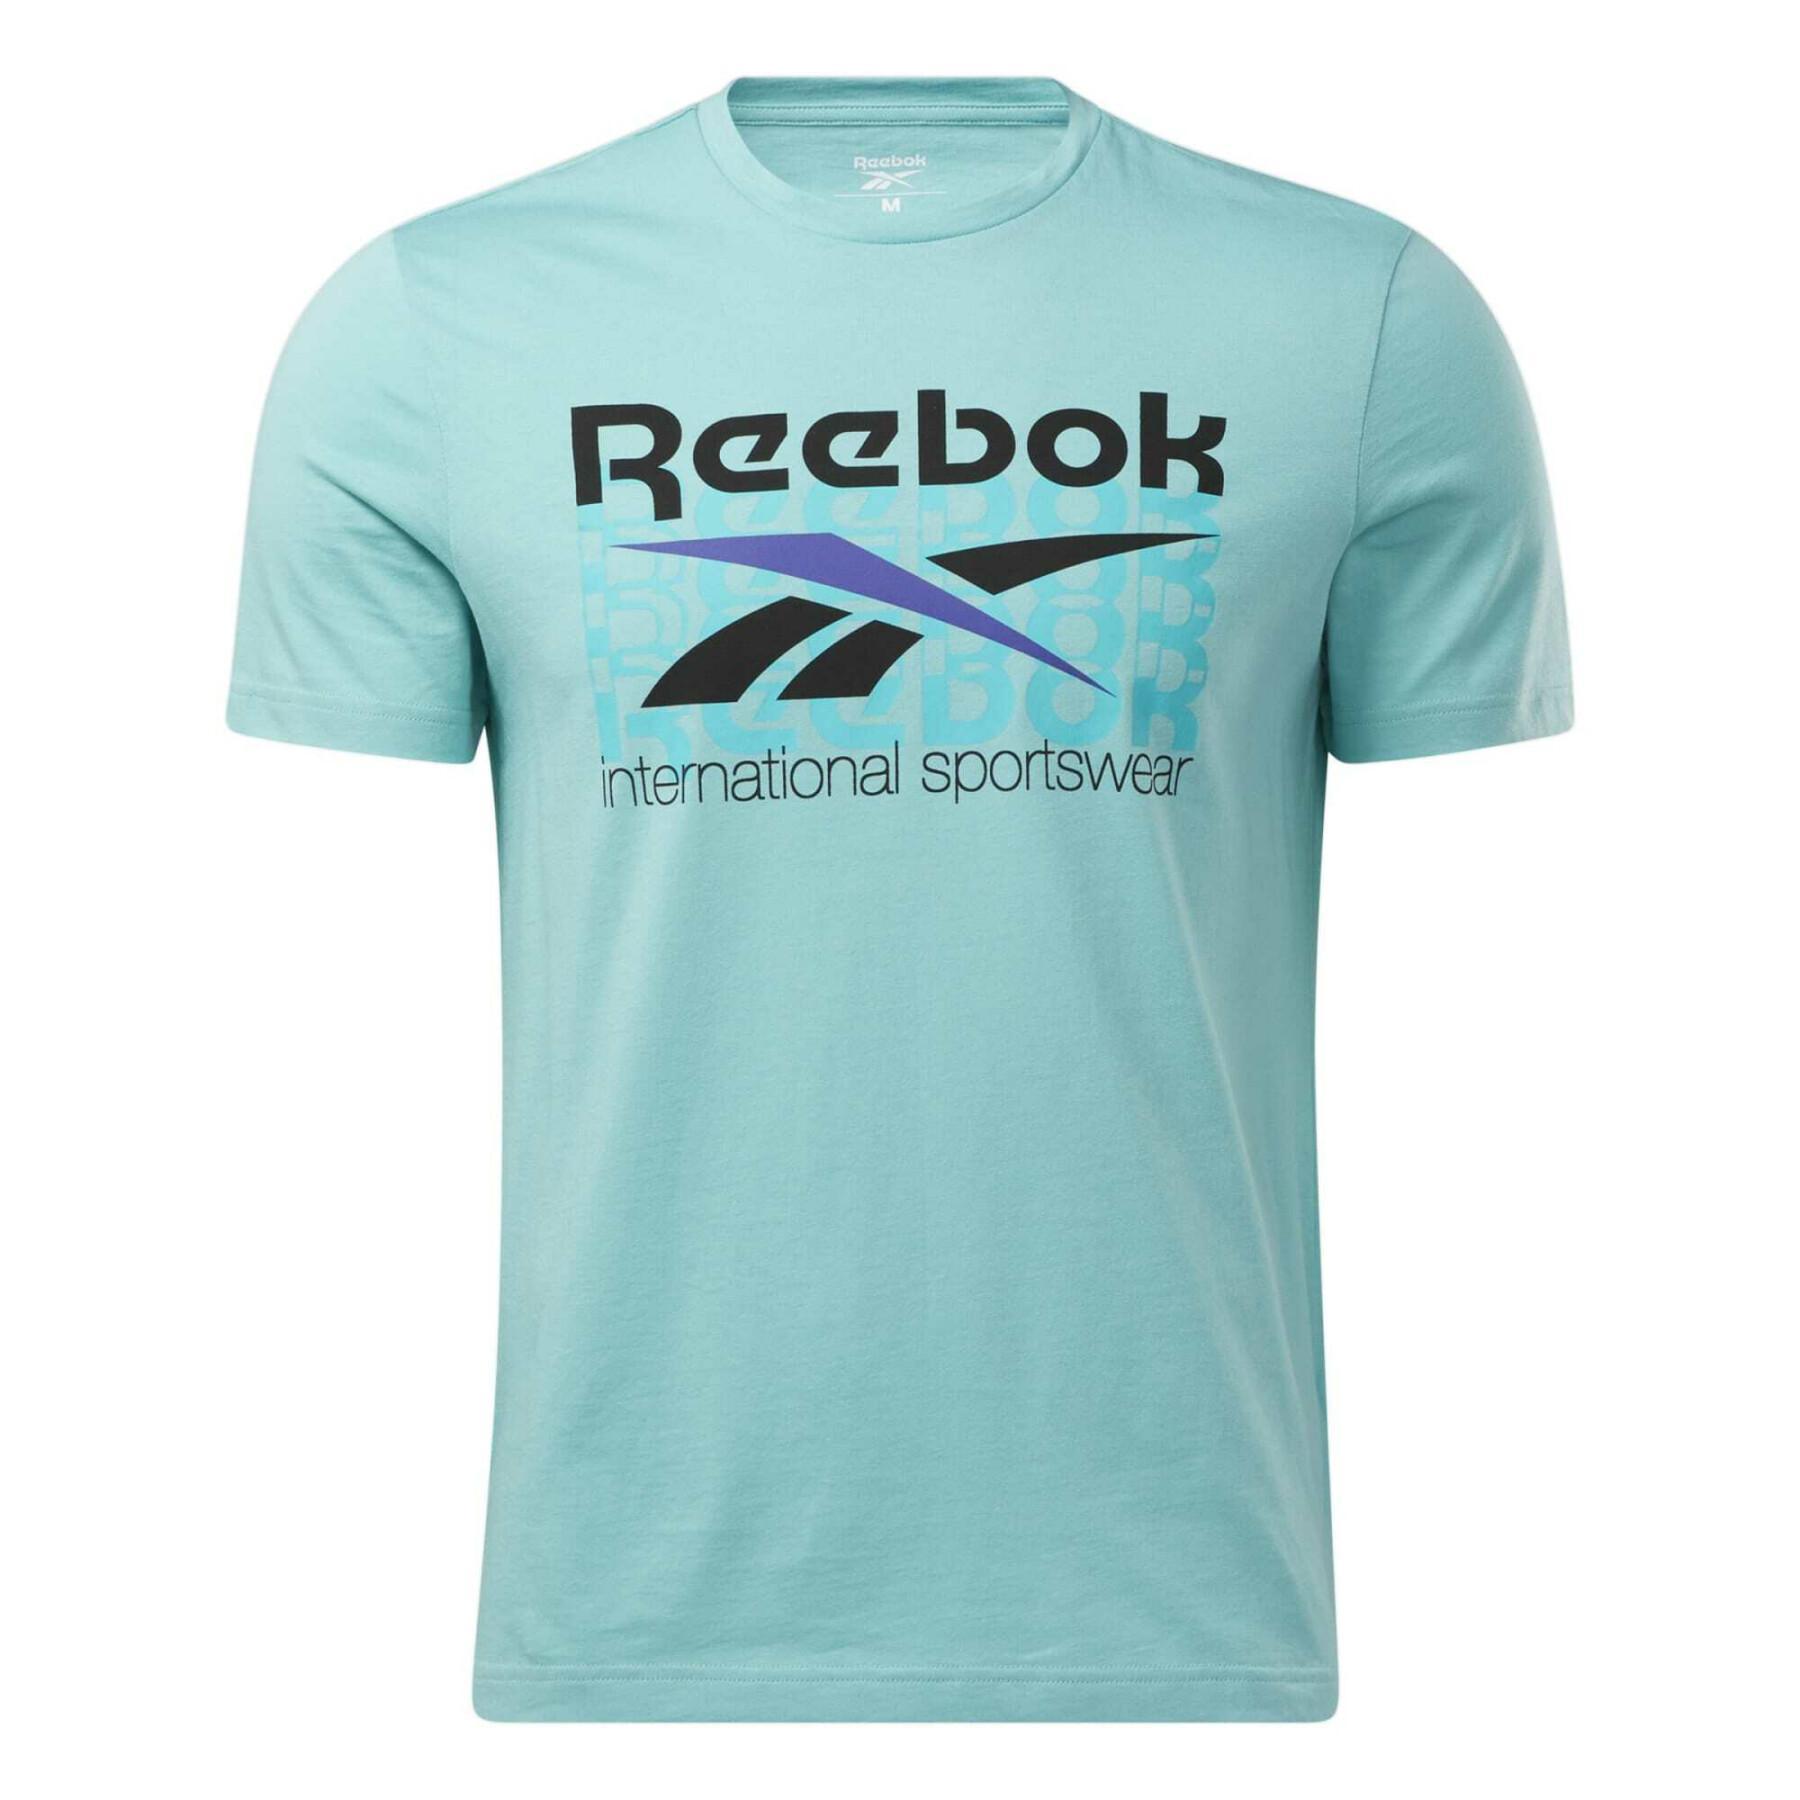 Koszulka Reebok Classics Graphic Series International Sportswear